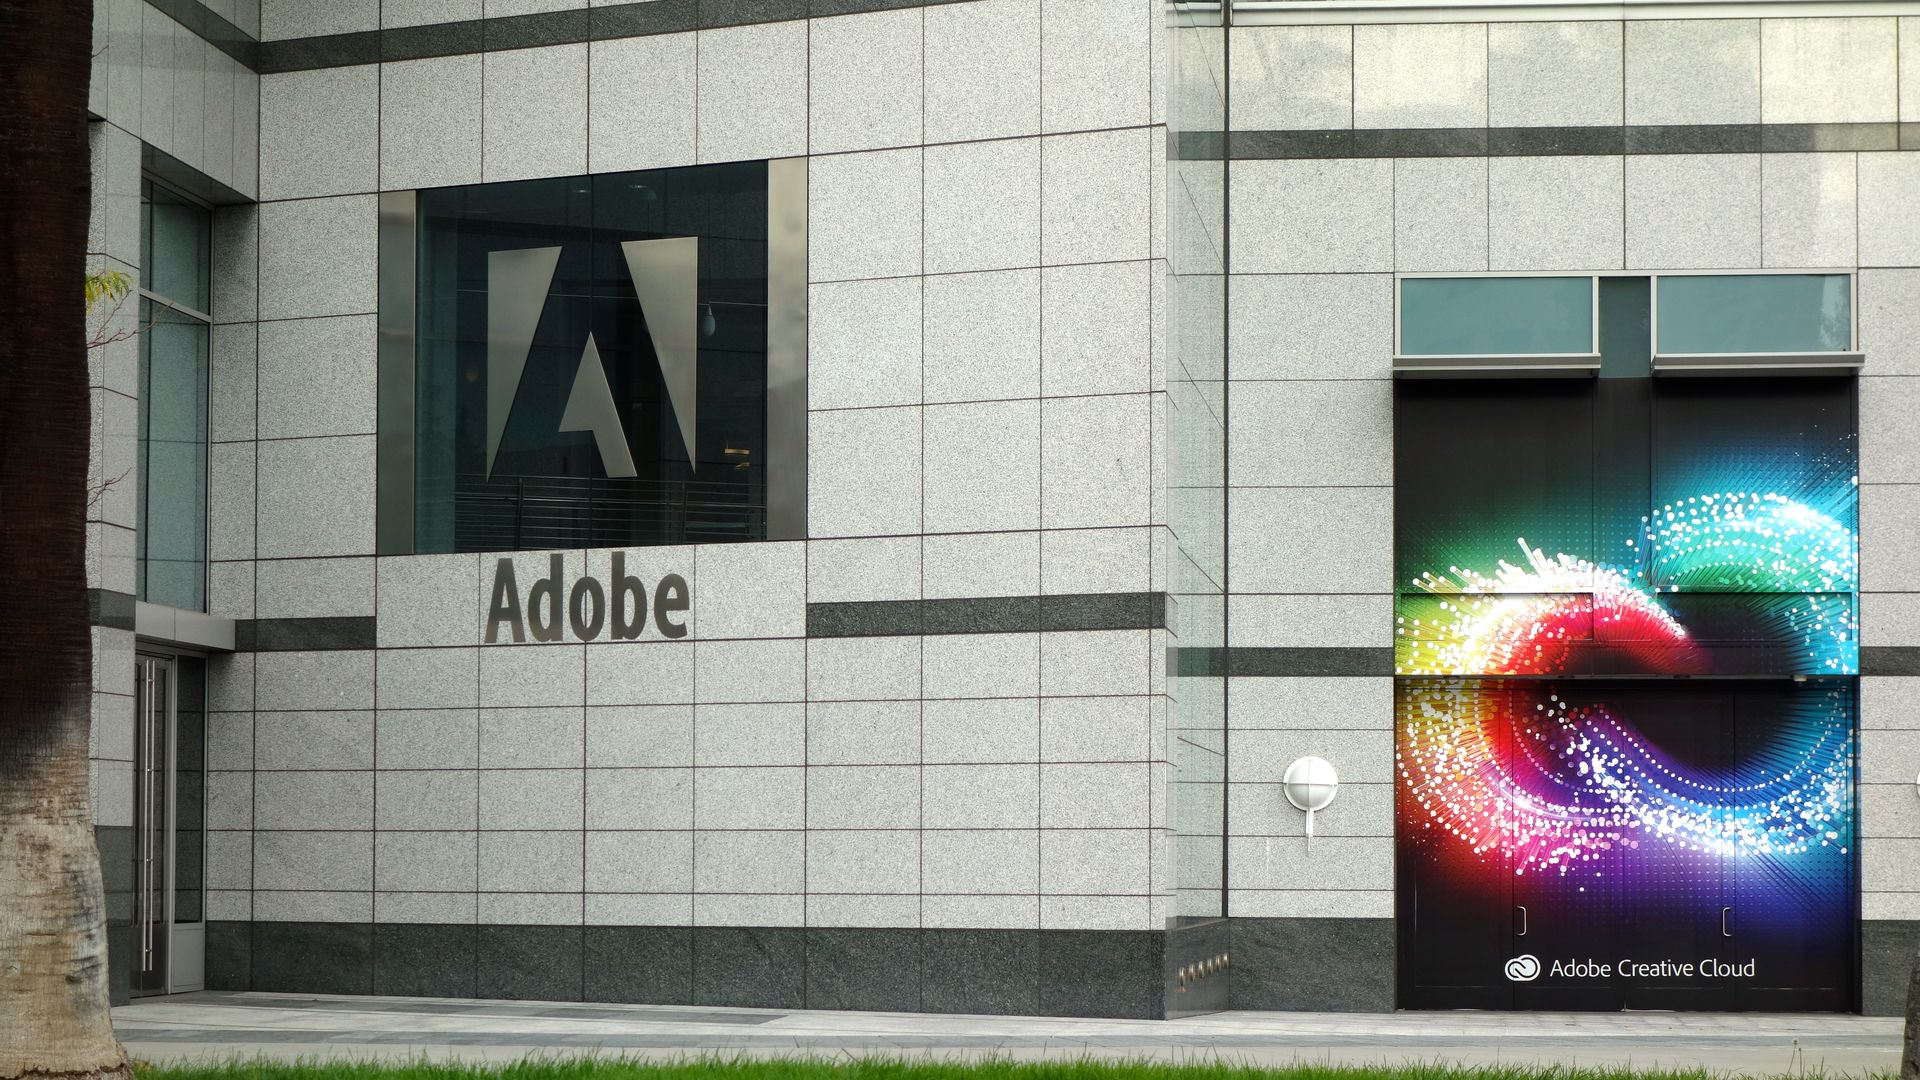 Adobe logo on an exterior wall